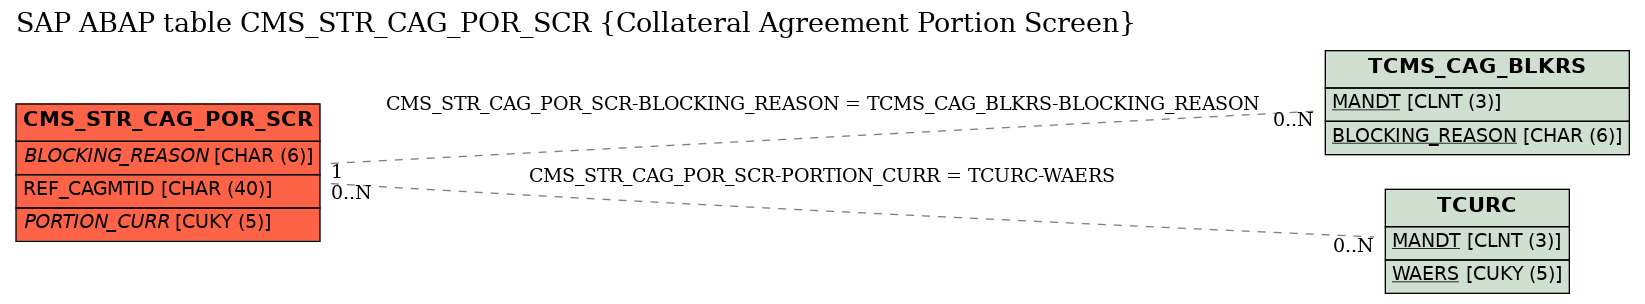 E-R Diagram for table CMS_STR_CAG_POR_SCR (Collateral Agreement Portion Screen)